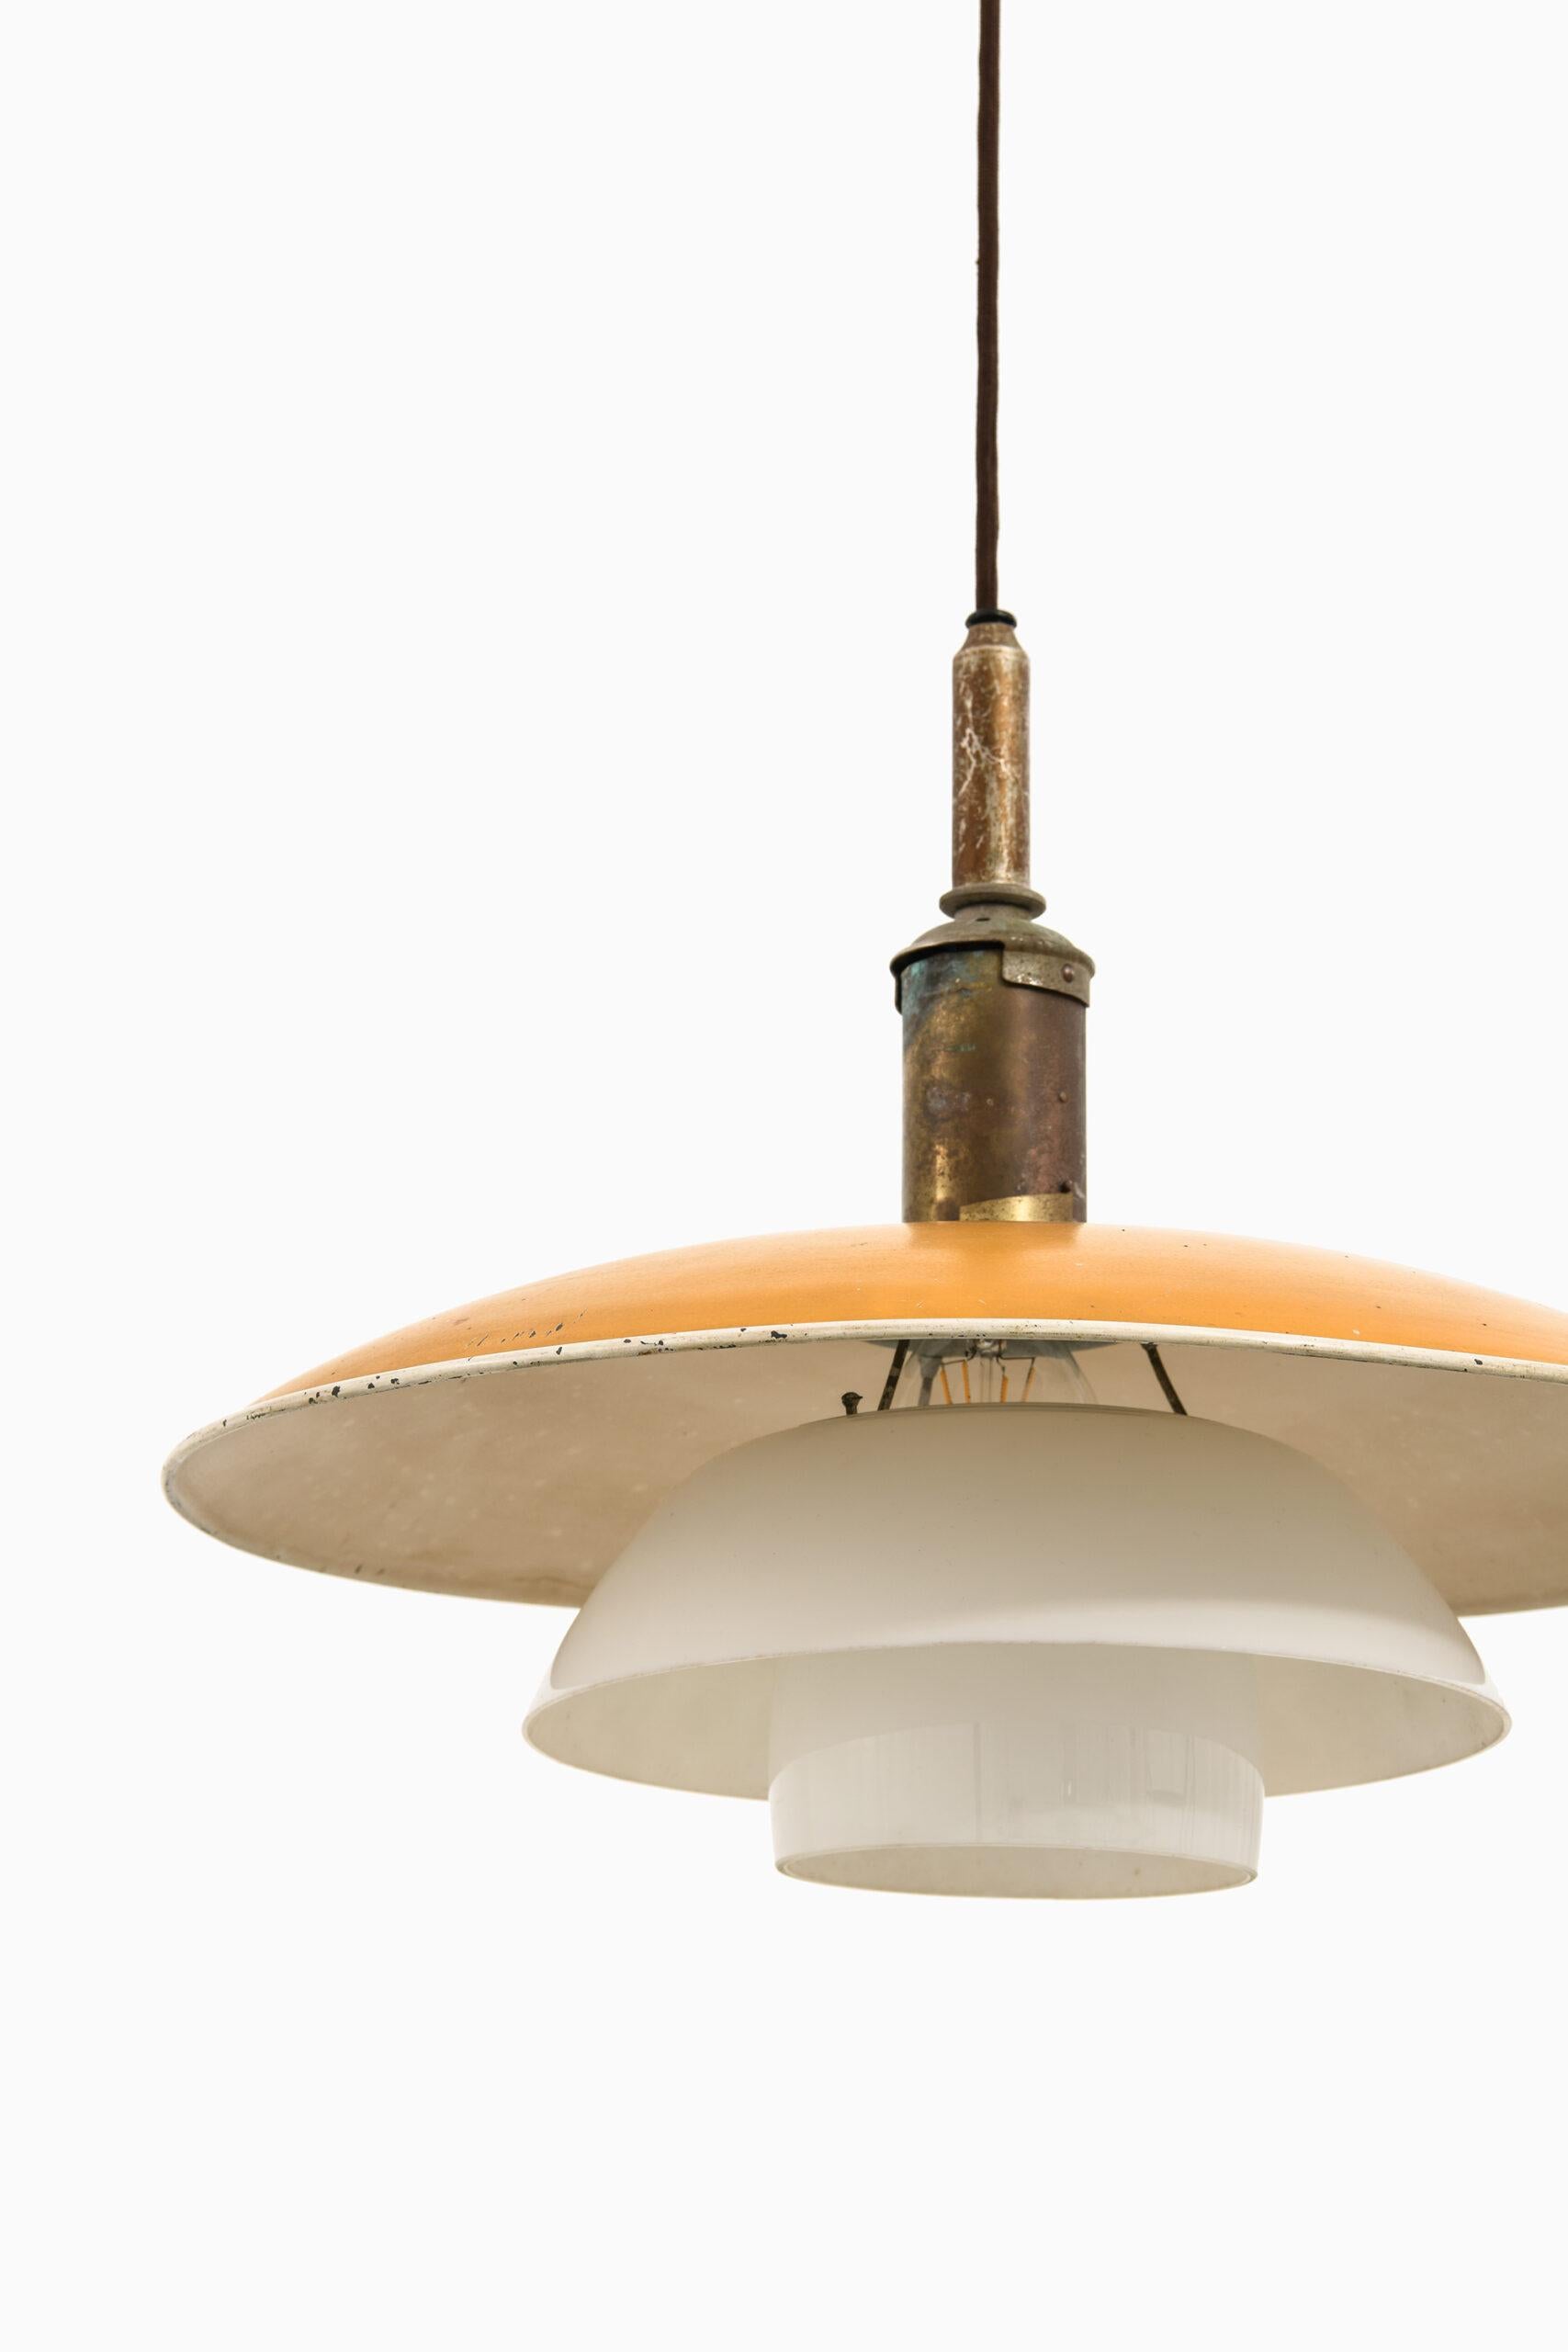 Scandinavian Modern Poul Henningsen Ceiling Lamp Model PH-5/5 Produced by Louis Poulsen For Sale